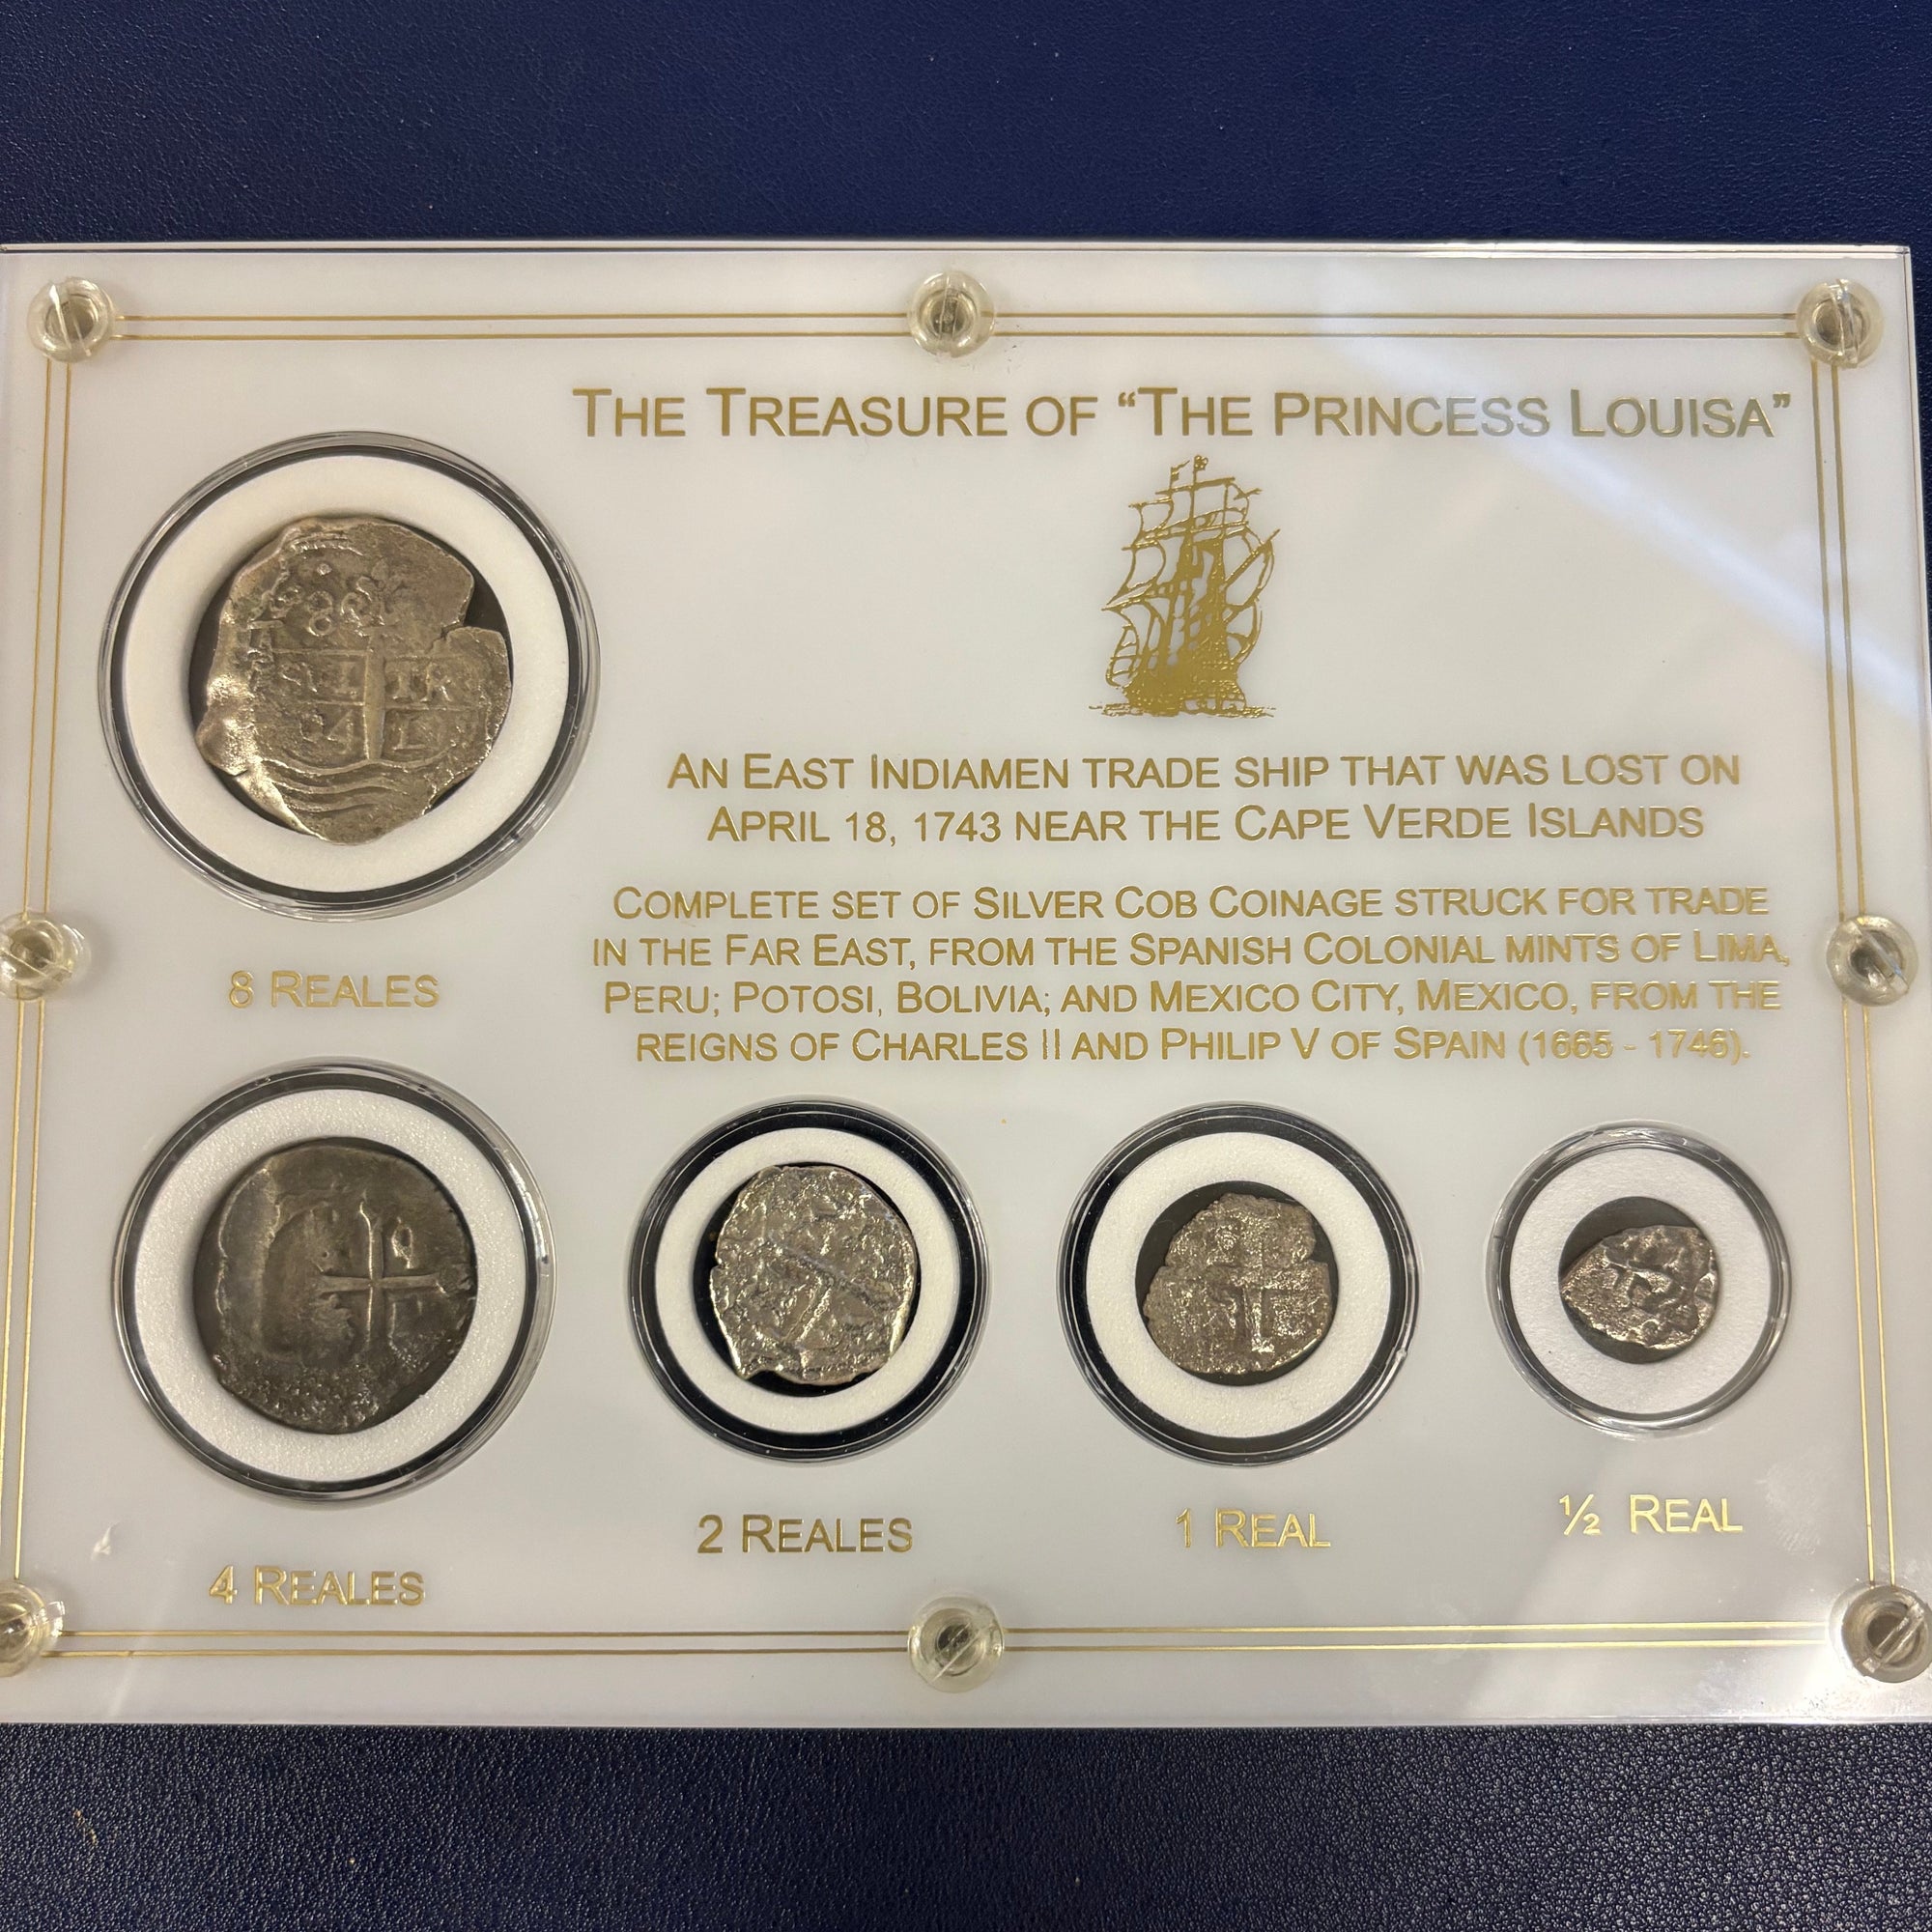 Princess Louisa Shipwreck - All 5 Denomination of Coins. 8 Reales, 4 Reales, 2 Reales, 1 Reales, 1/2 Reales.